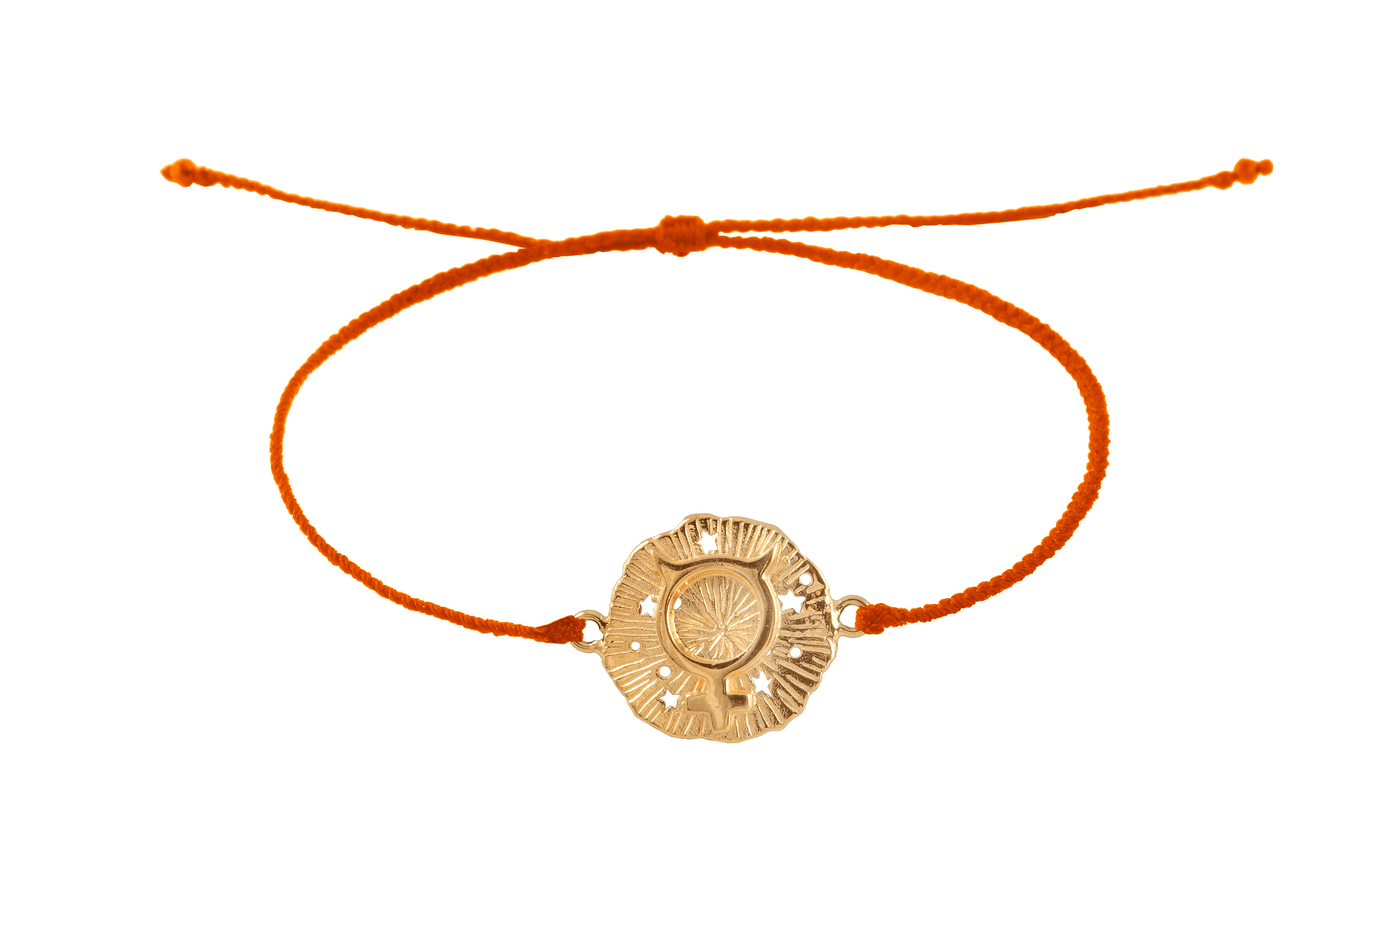 String bracelet with Mercury medallion amulet. Gold plated